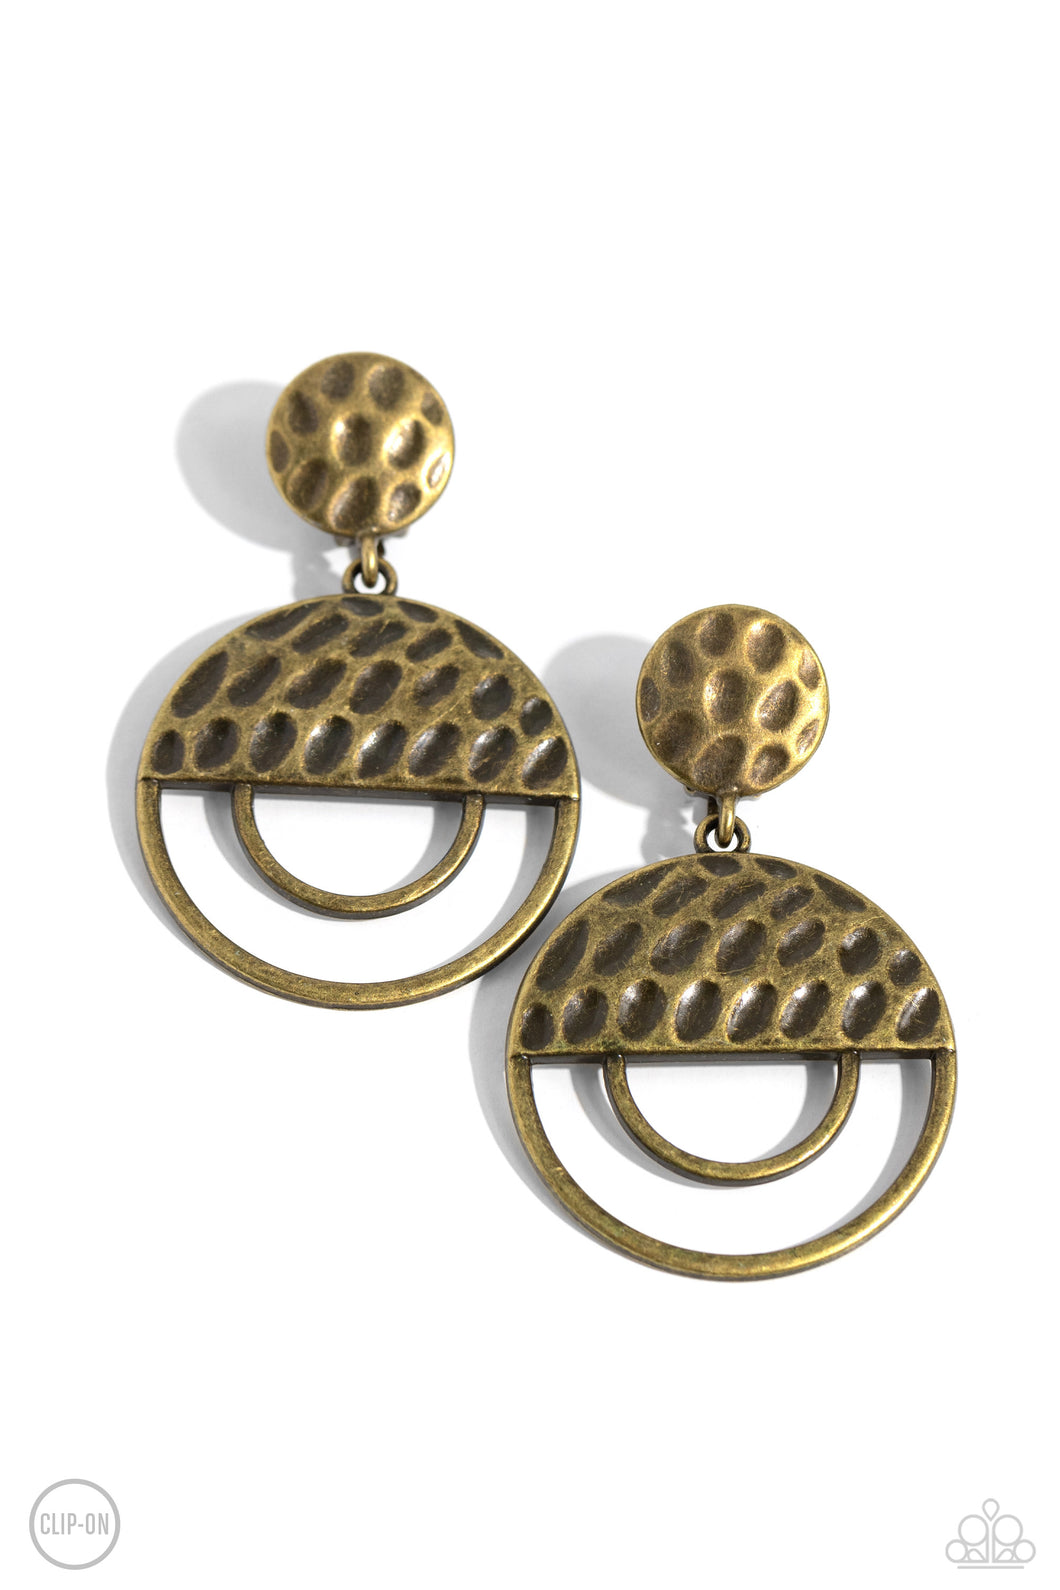 Southern Souvenir - Brass (Clip-On) Earring